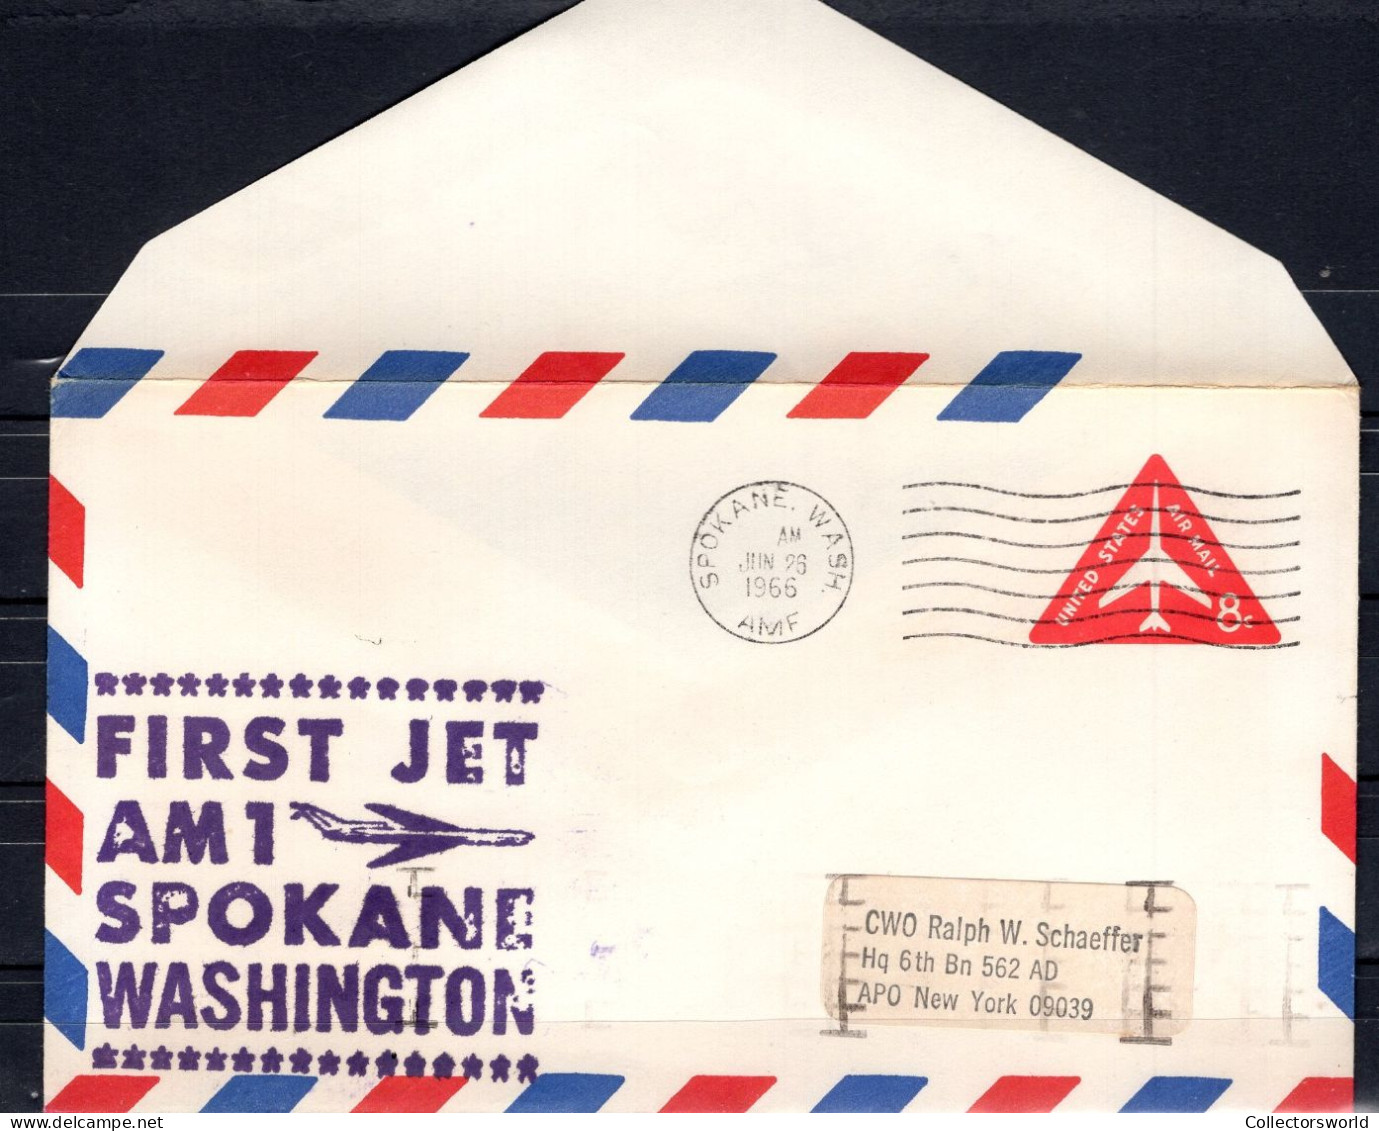 USA 1966 First Flight Cover First Jet AM1 Spokane - Washington Purple Ink Embossed 8c - Schmuck-FDC